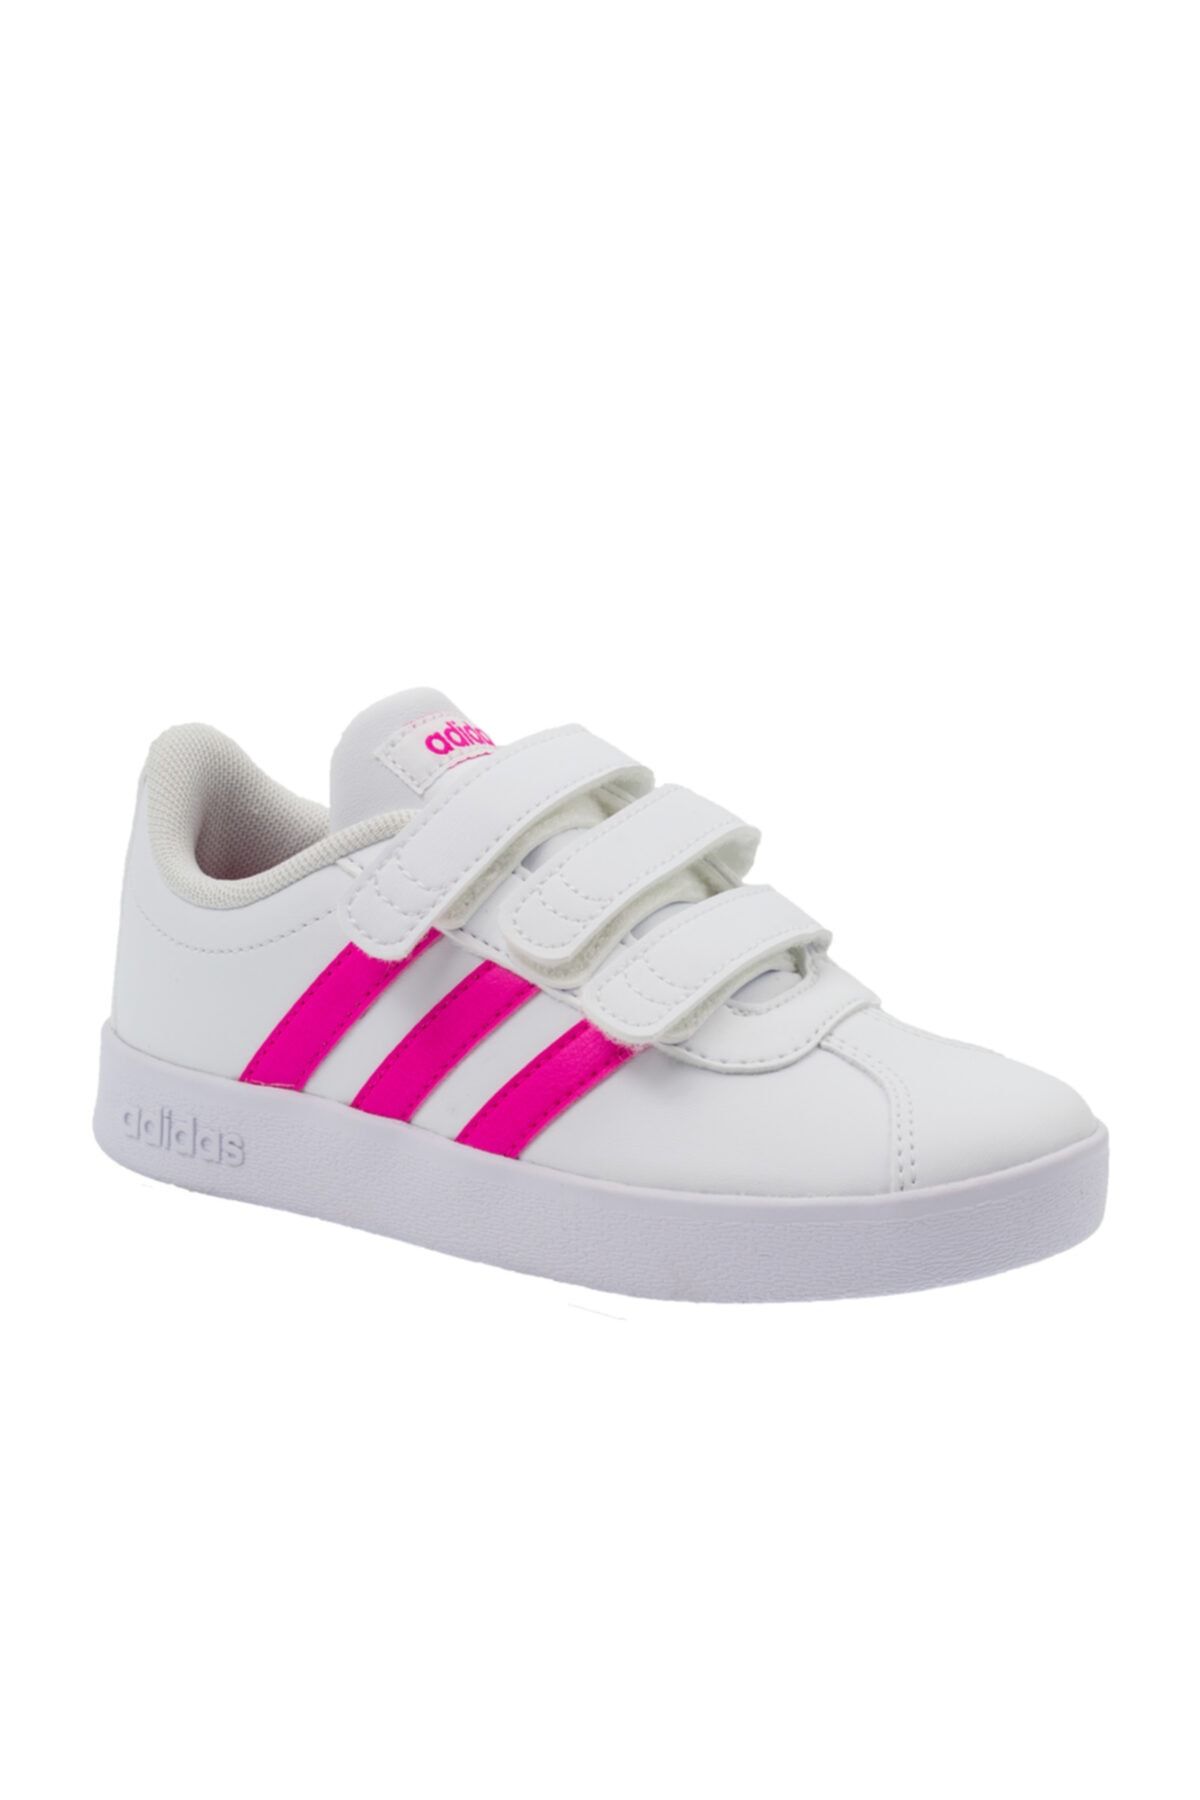 adidas VS SWITCH 2 CMF Pembe Kız Çocuk Sneaker Ayakkabı 100536363